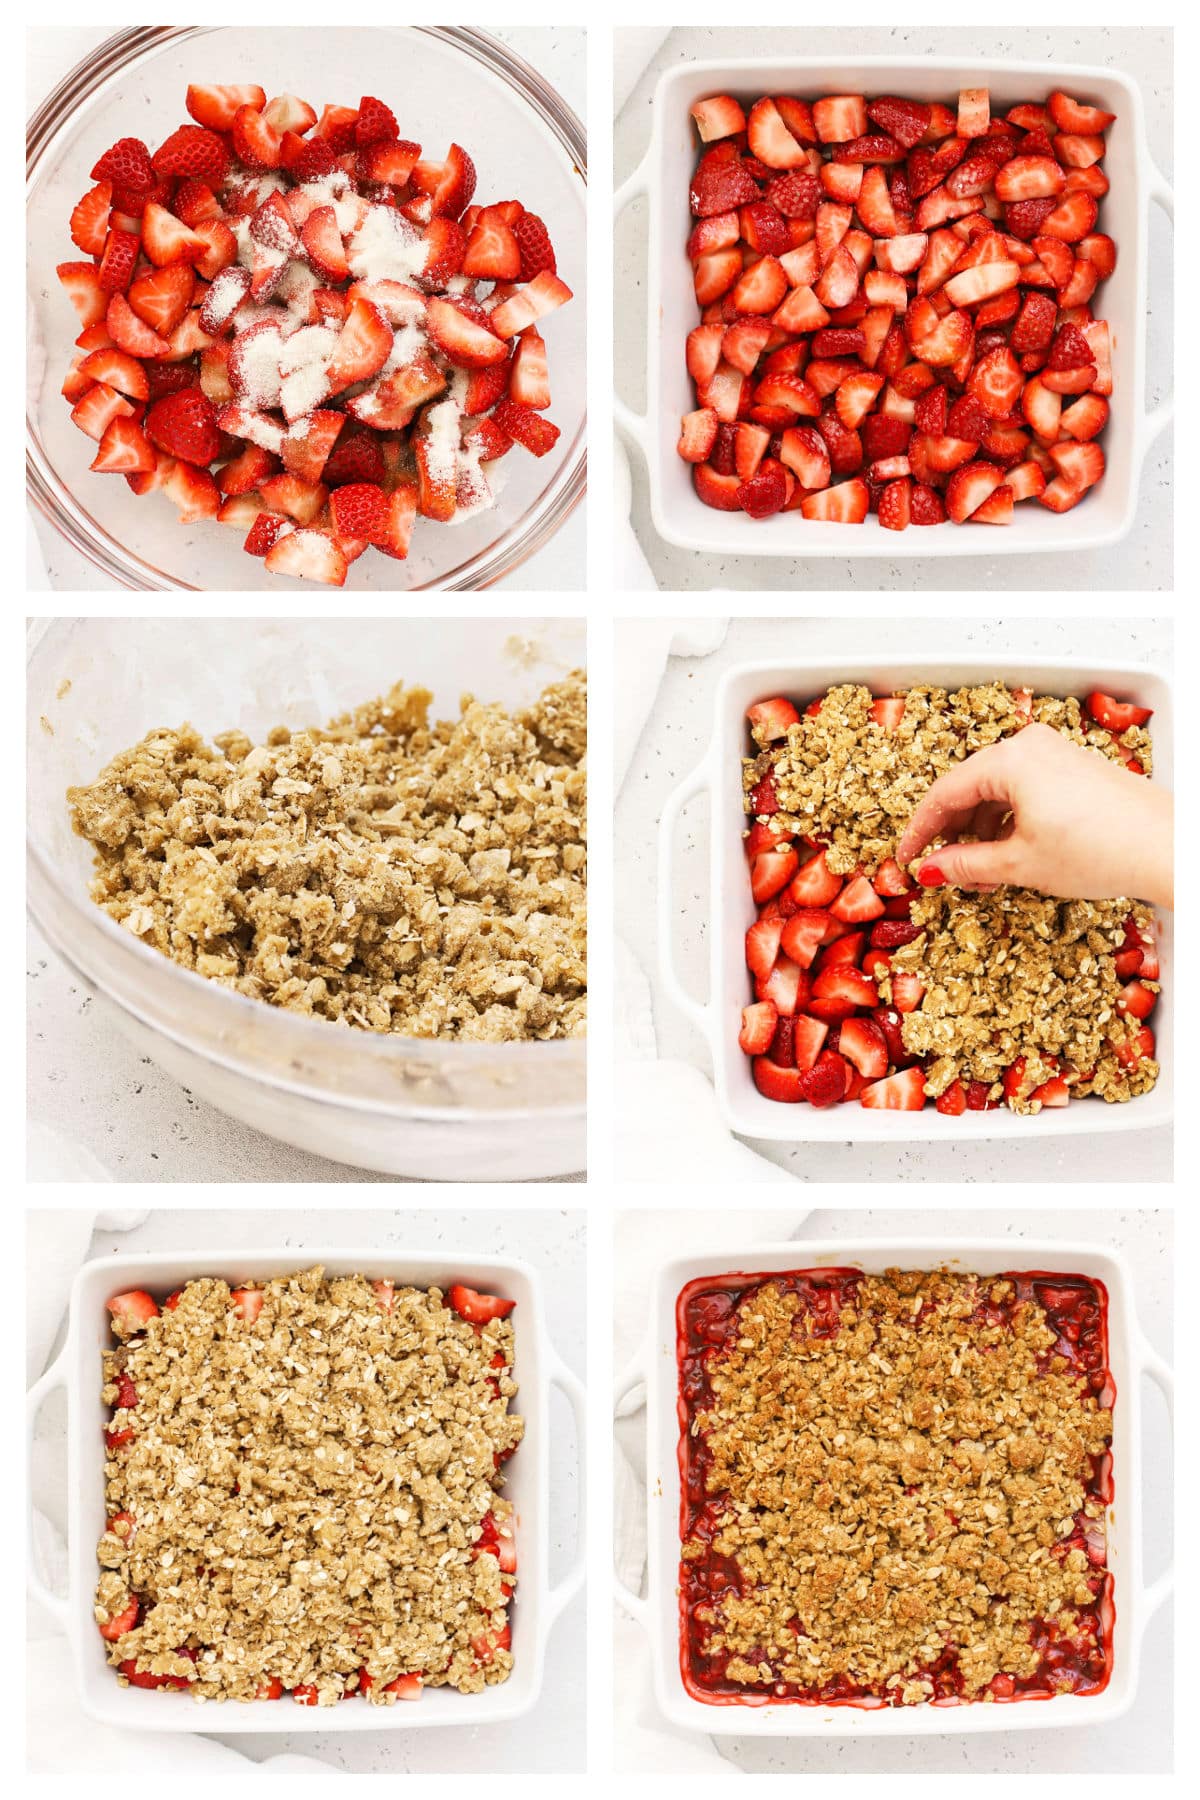 making gluten-free strawberry crisp step by step